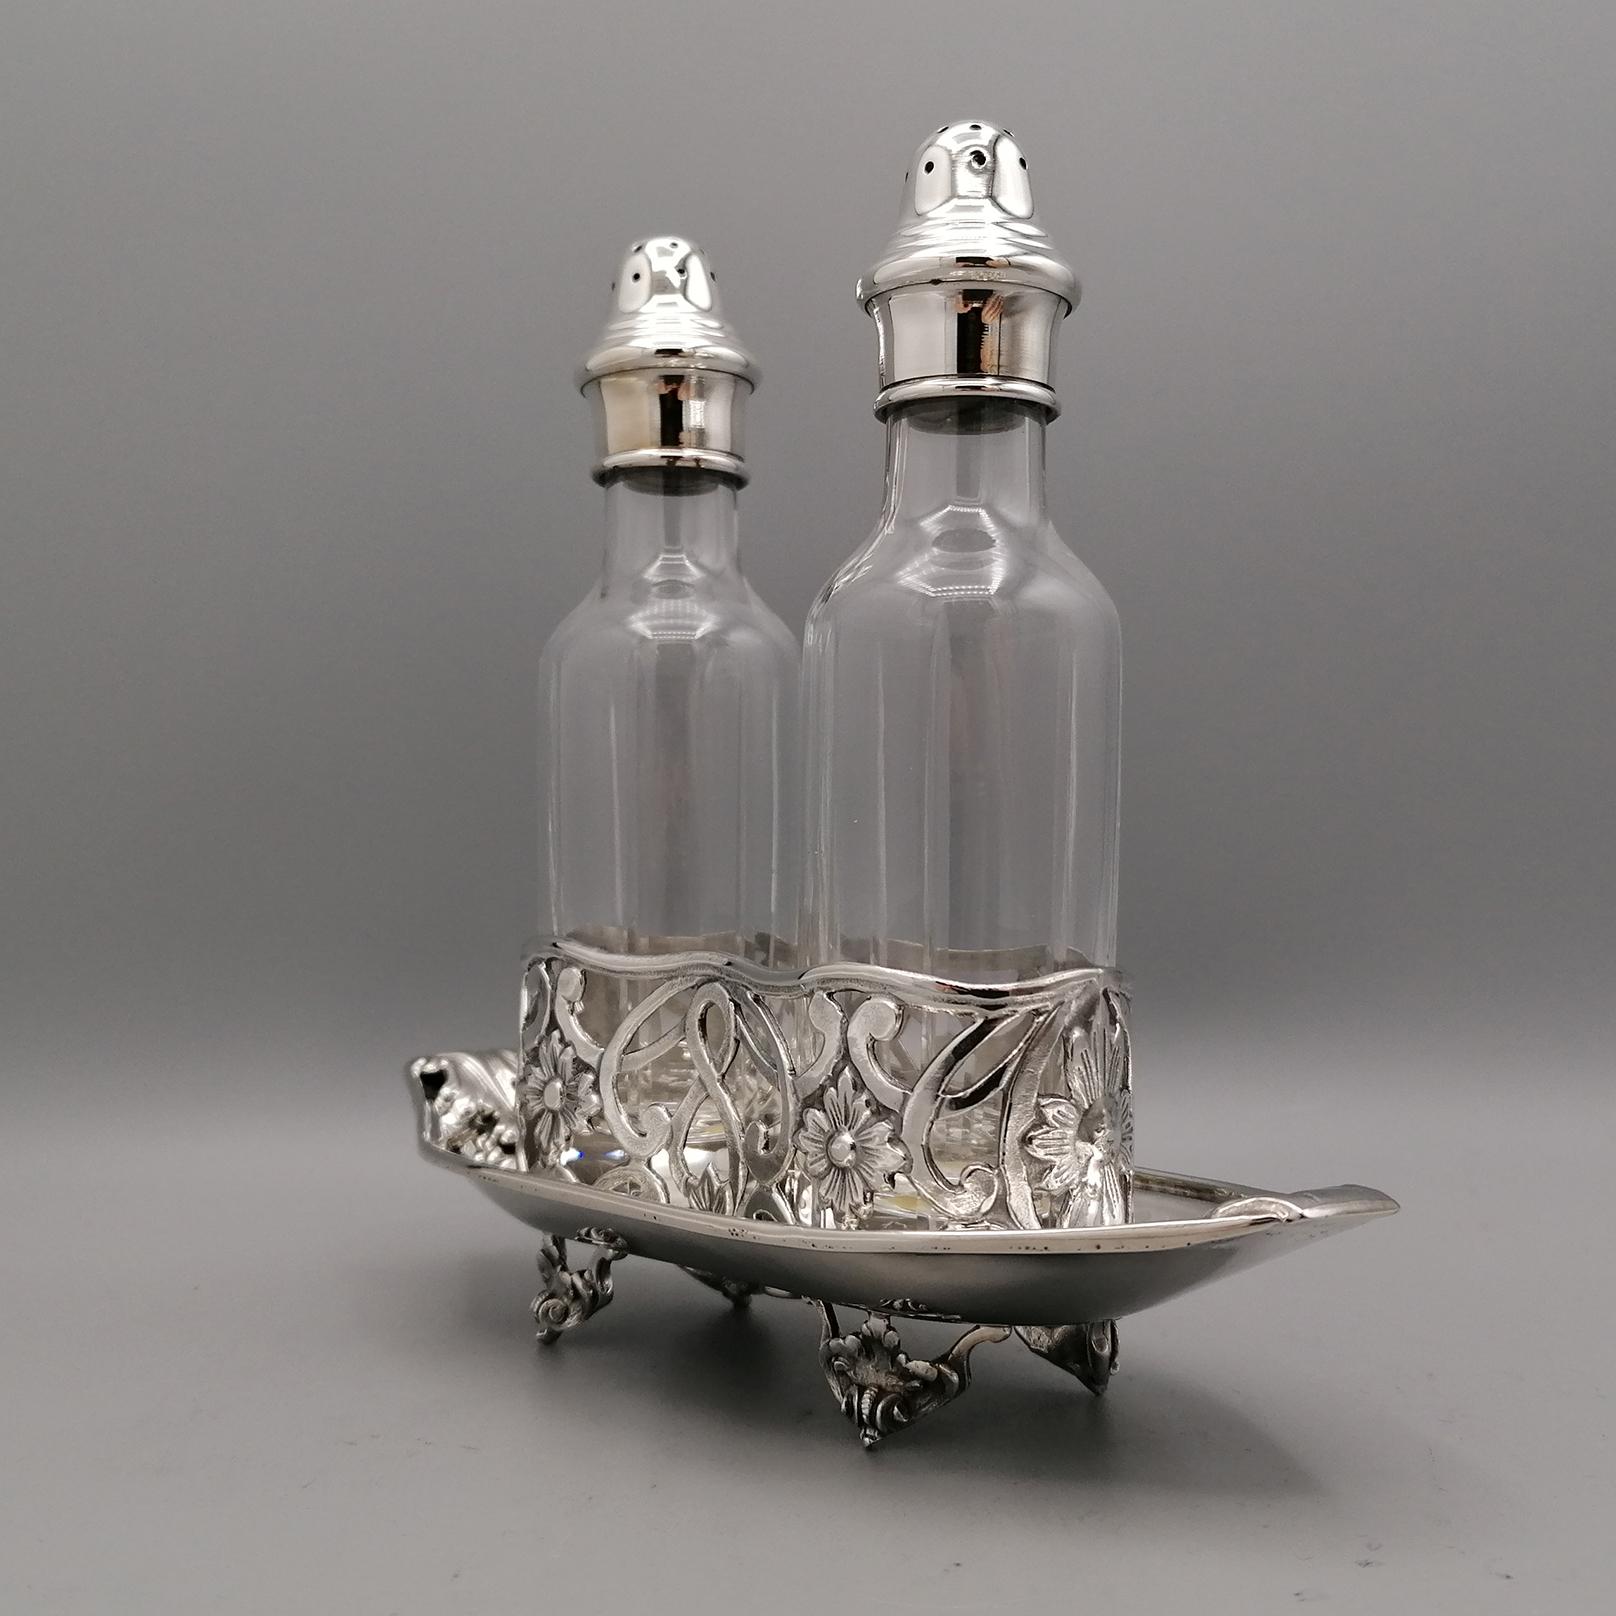 20th Century Italian Art Nouveau - Liberty replica Sterling Silver - Cruet Set  For Sale 9